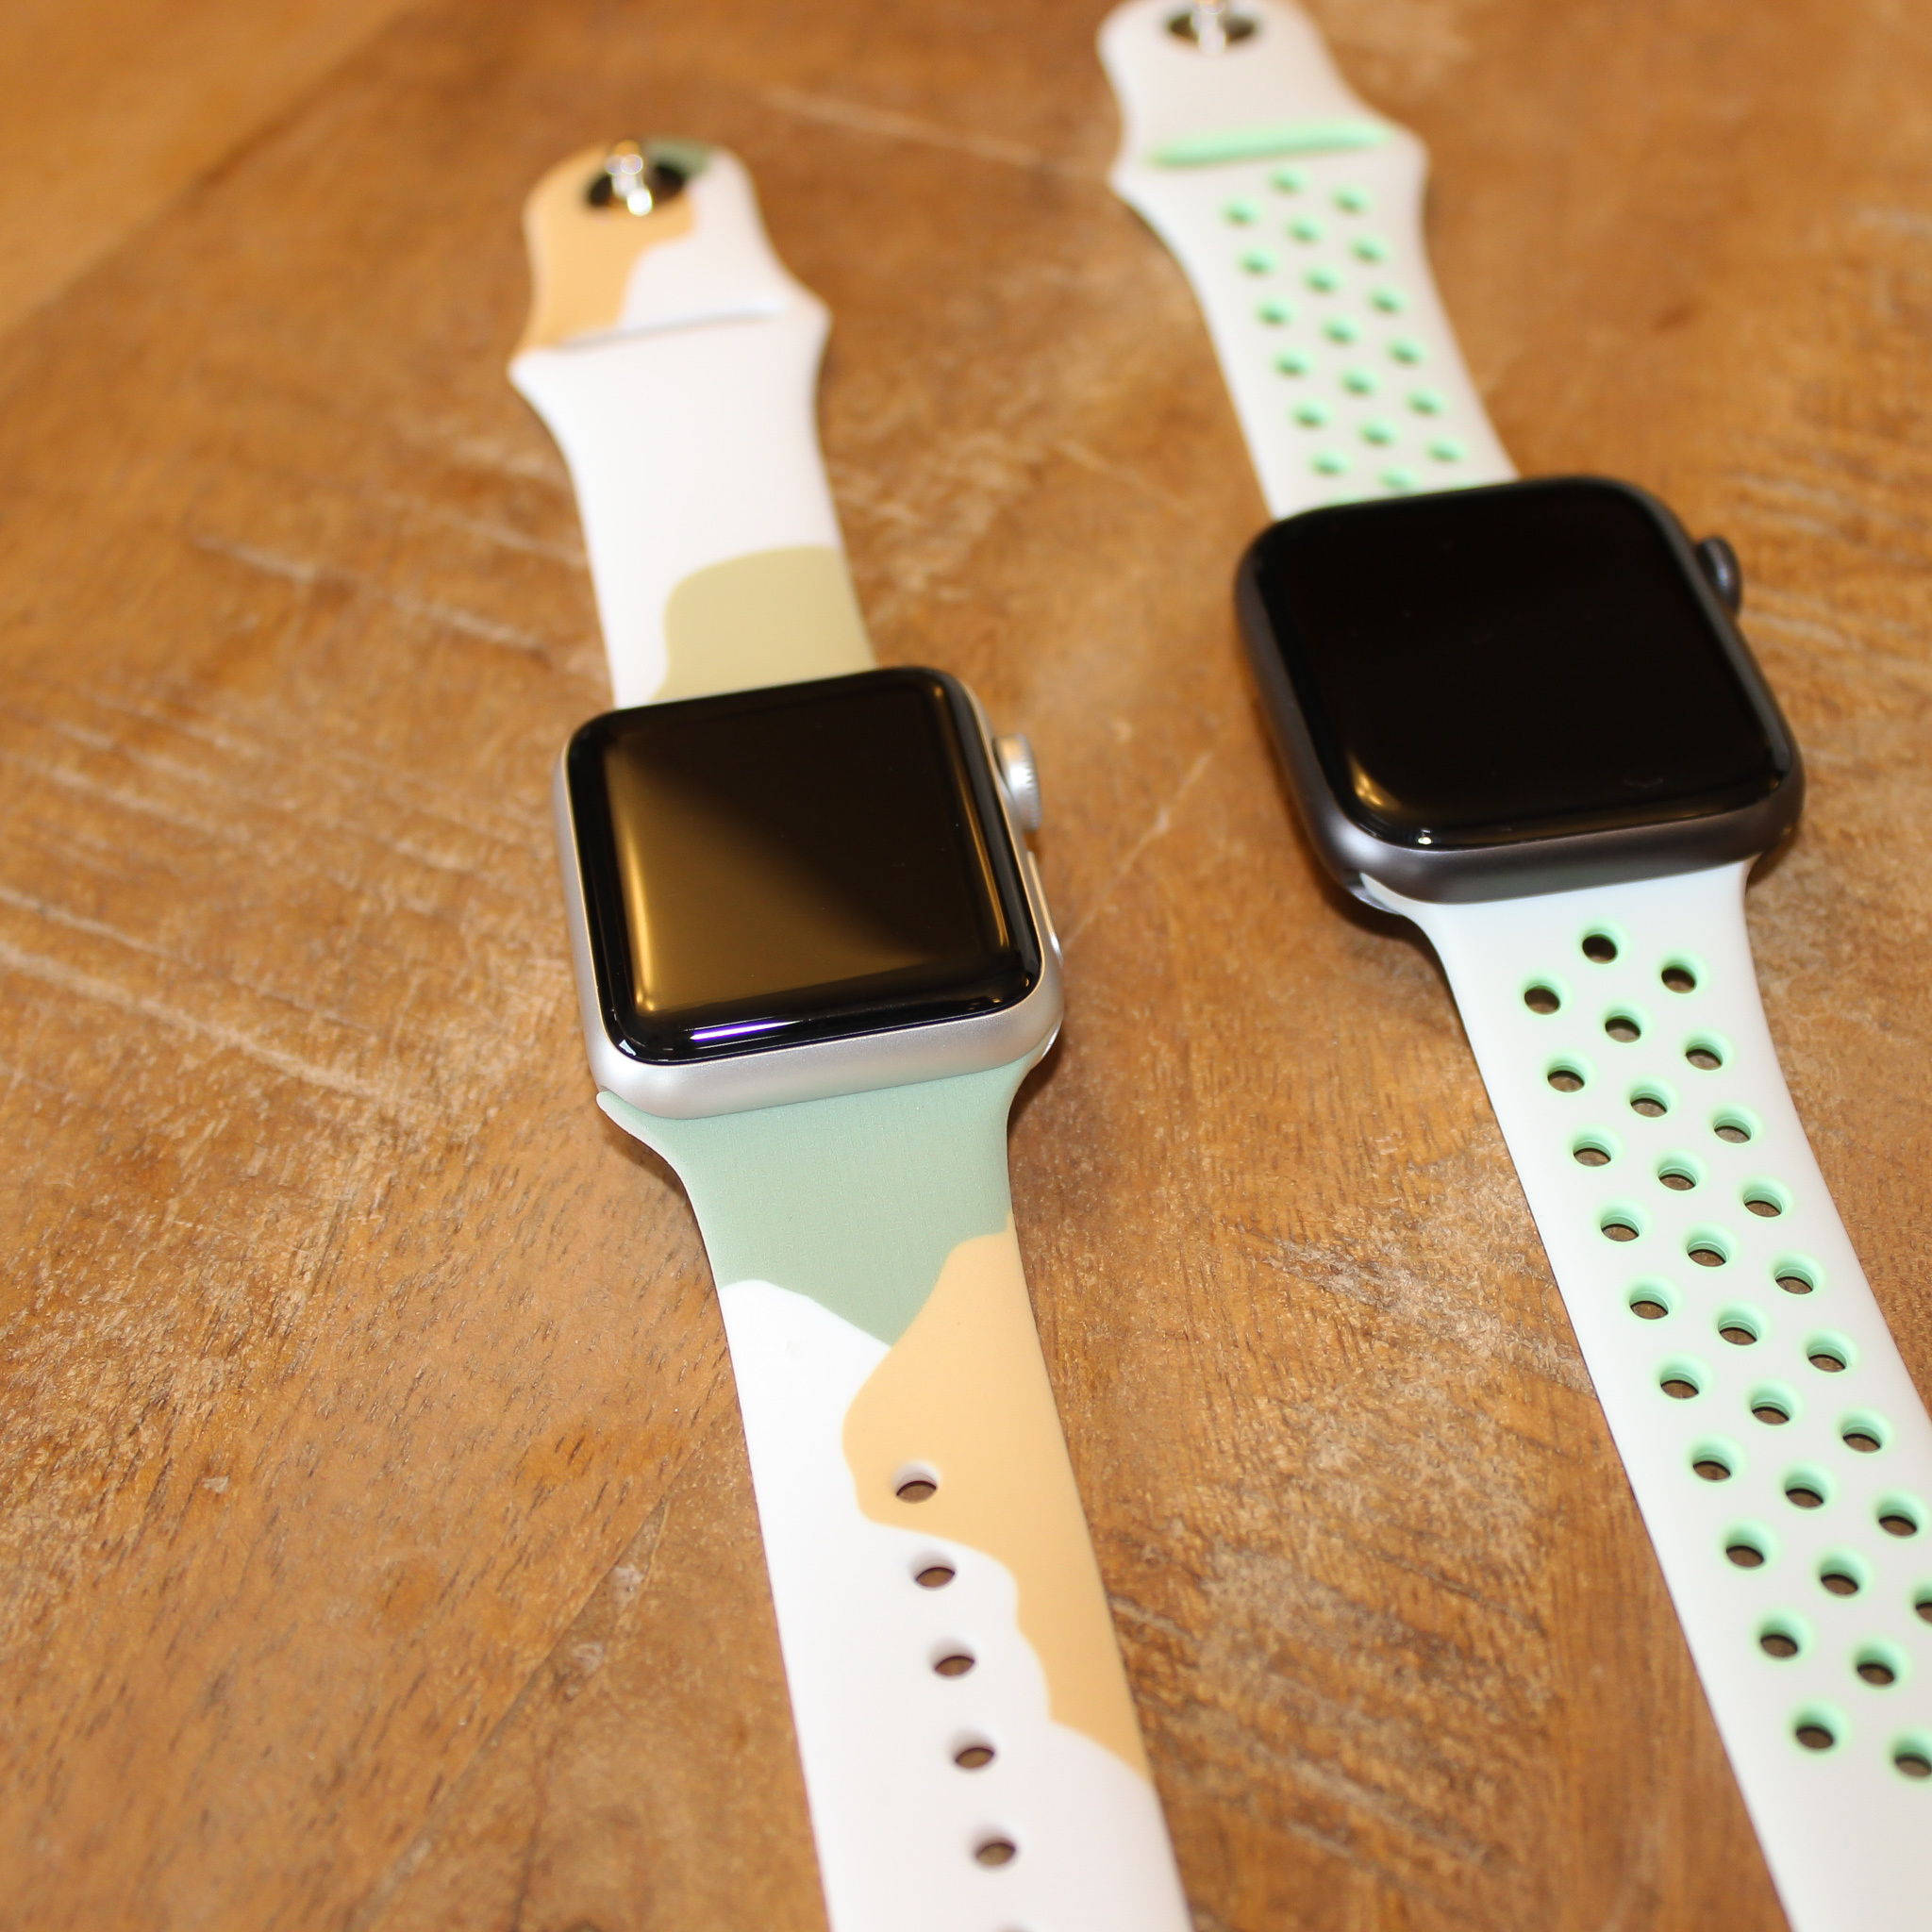  Apple Watch dupla sport pánt - aura zöld